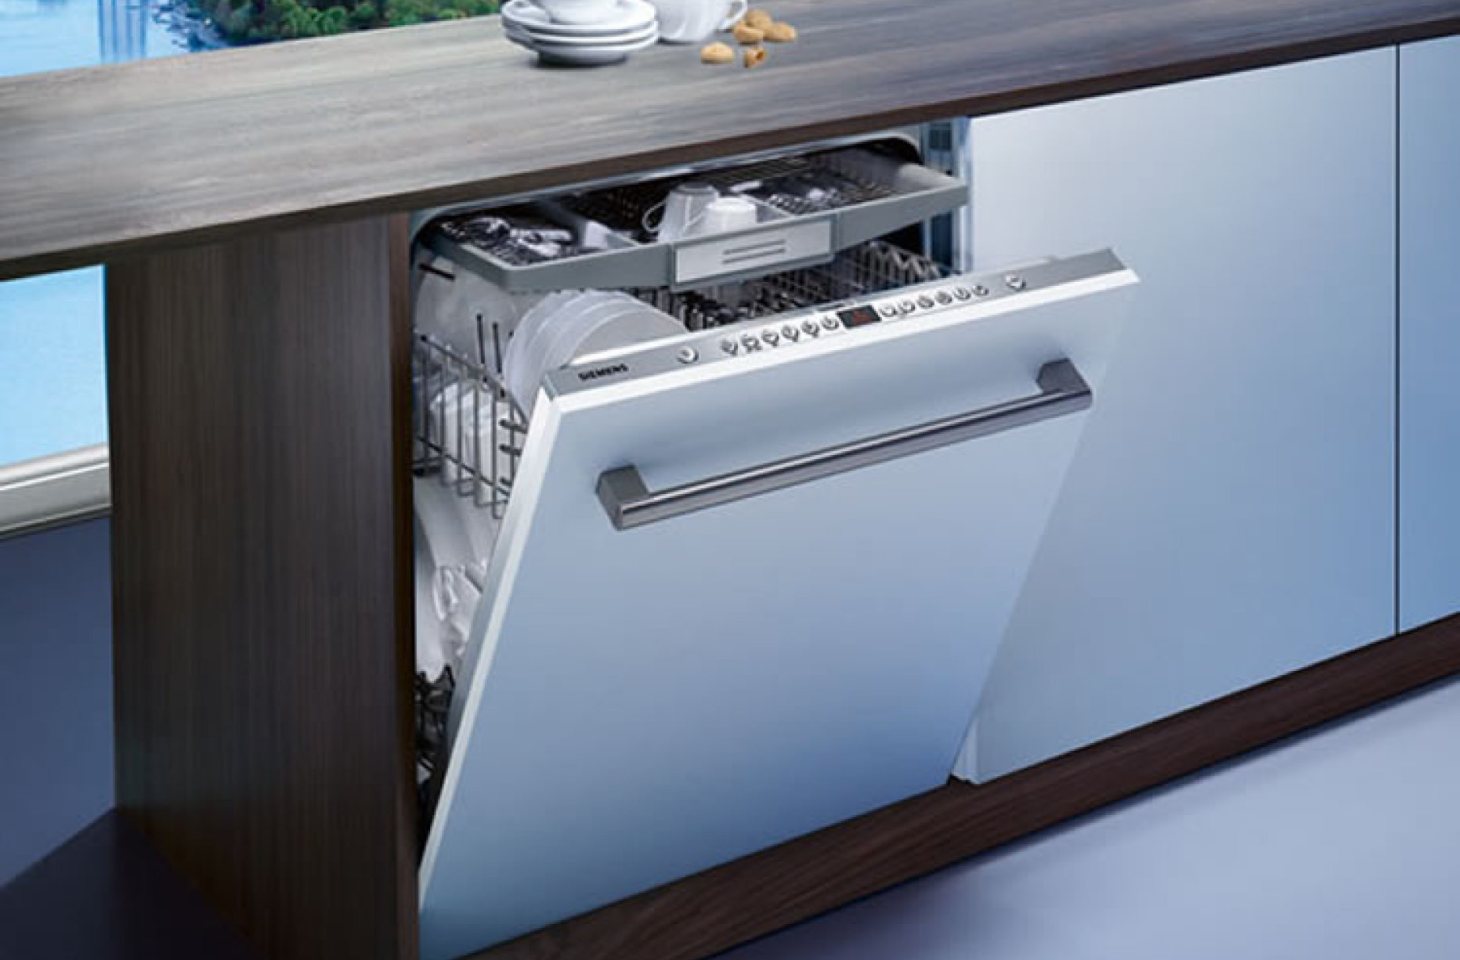 Siemens-Dishwasher-stainless-steel-Fully-integratedR65T080GB-1864x1491.jpg